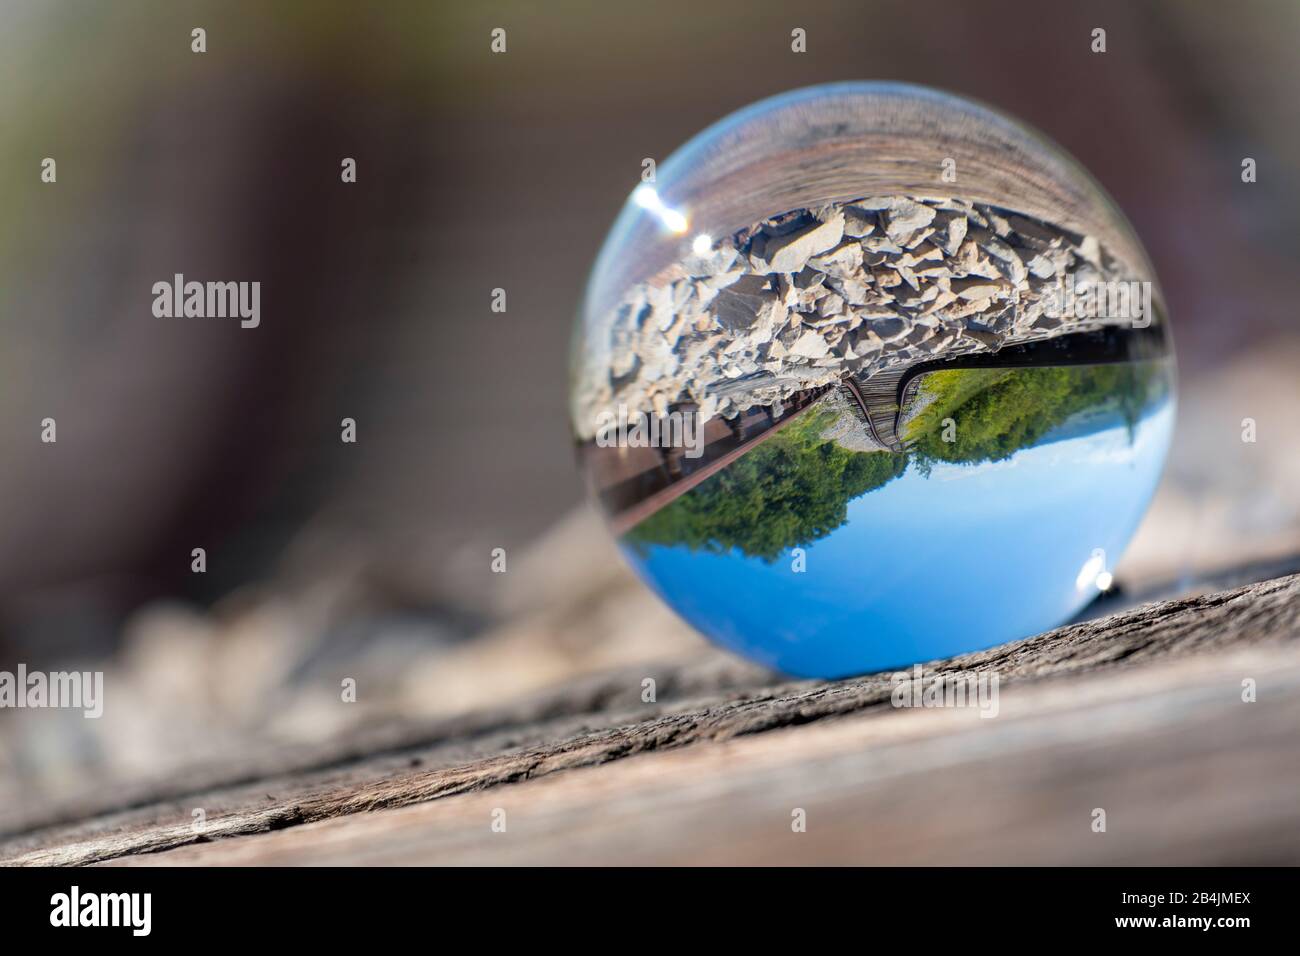 La bola de cristal refleja la imagen invertida del antiguo ferrocarril, Pijana pruga, Kozljak, Krsan, el condado de Istria, Croacia Foto de stock